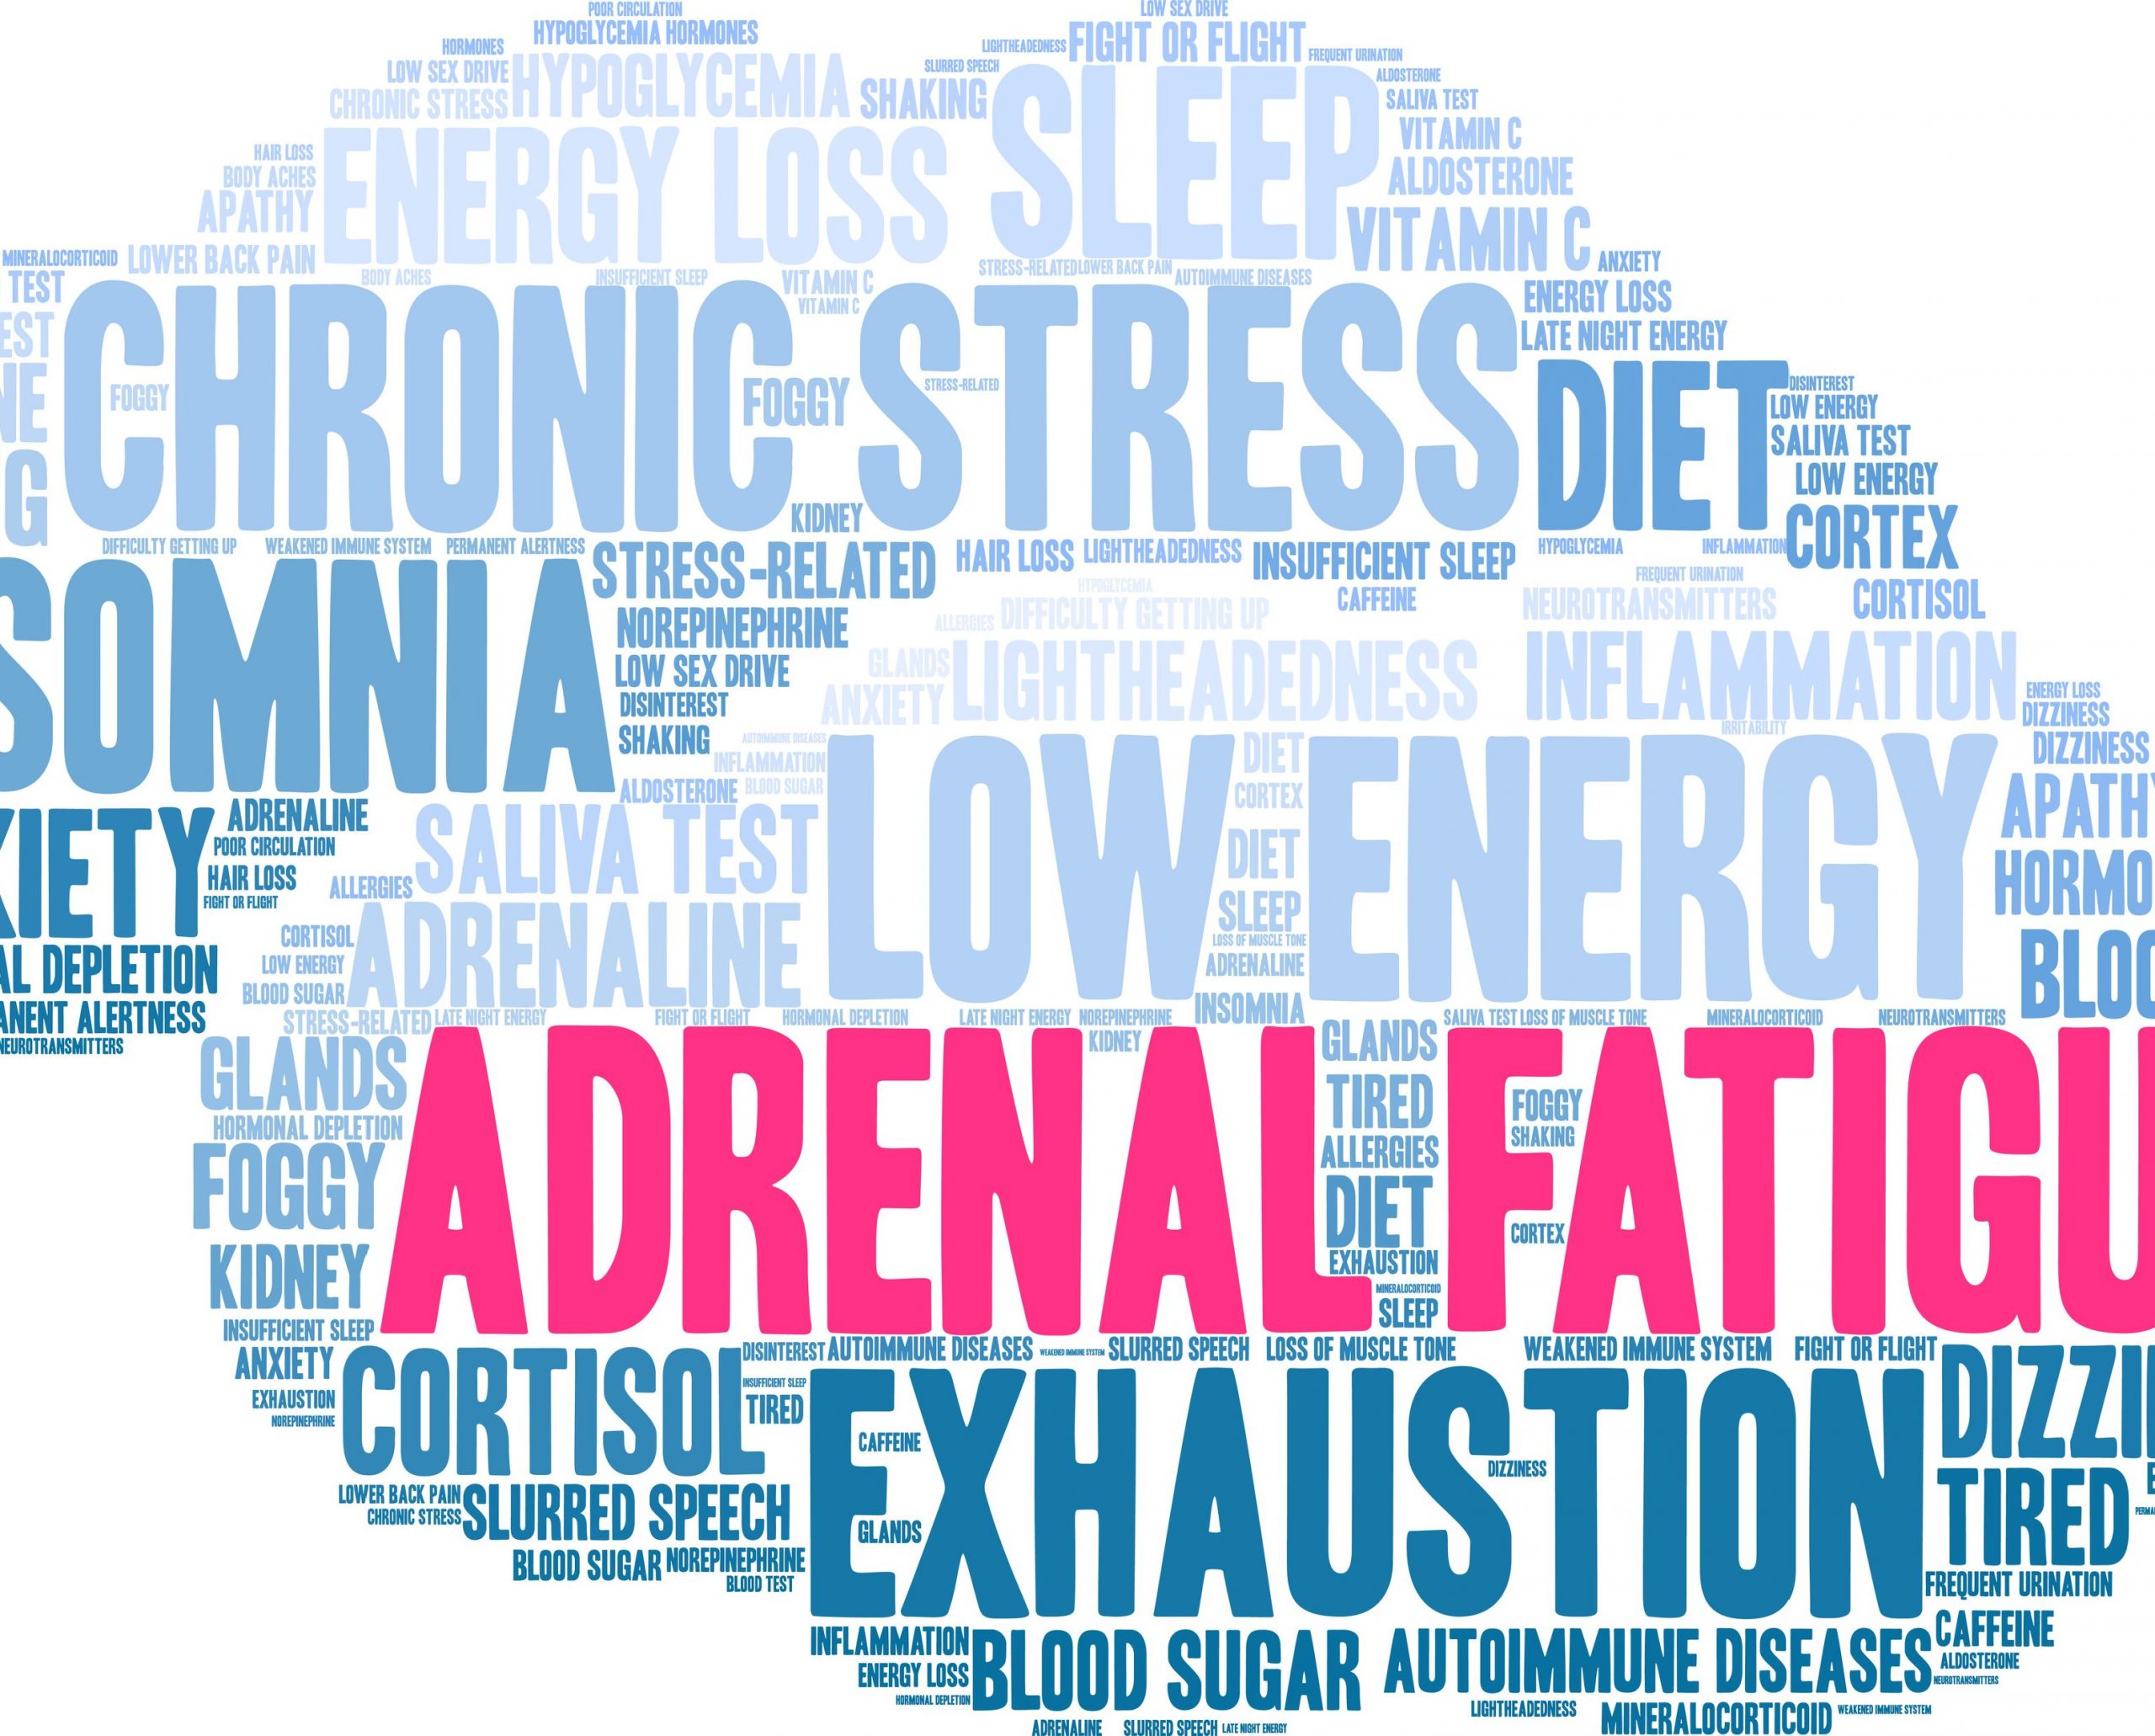 Get Help With Adrenal Fatigue Near Irvine